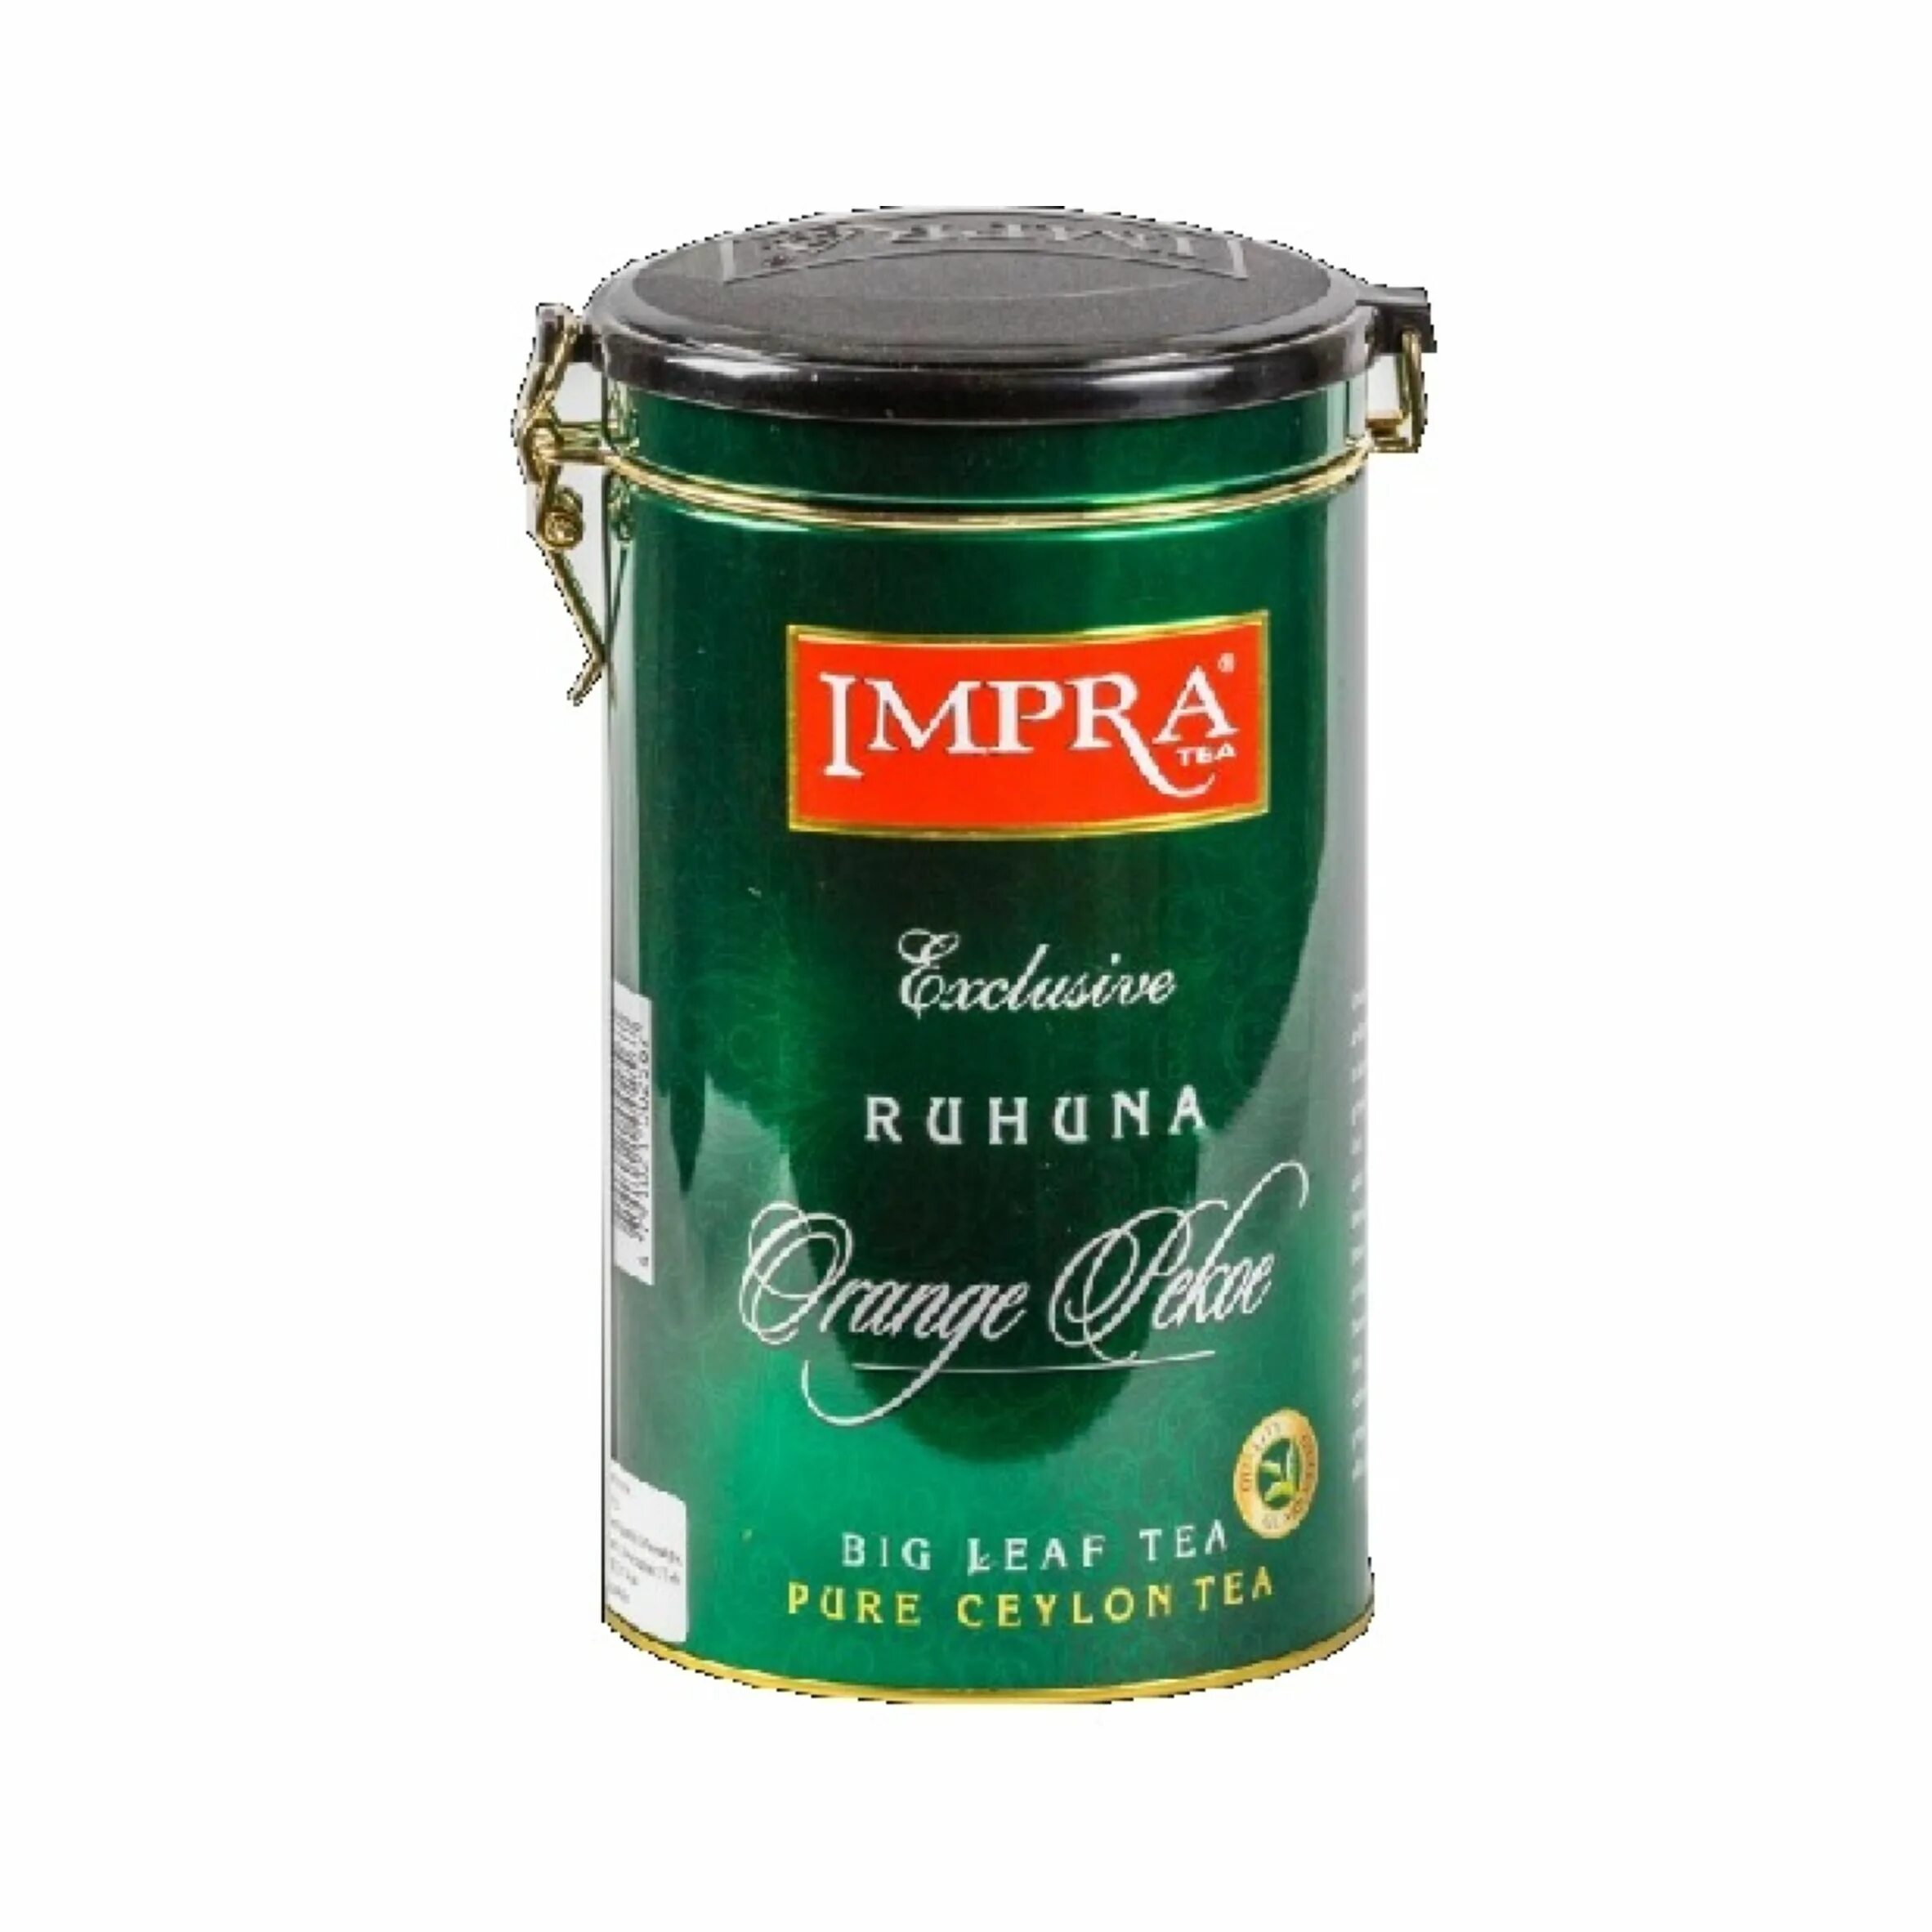 Чай черный ж б. Чай Импра жб 100 гр Рухуна. Ceylon Tea Impra. Impra чай . 100sht. Impra крупнолистовой черный чай 200 гр.